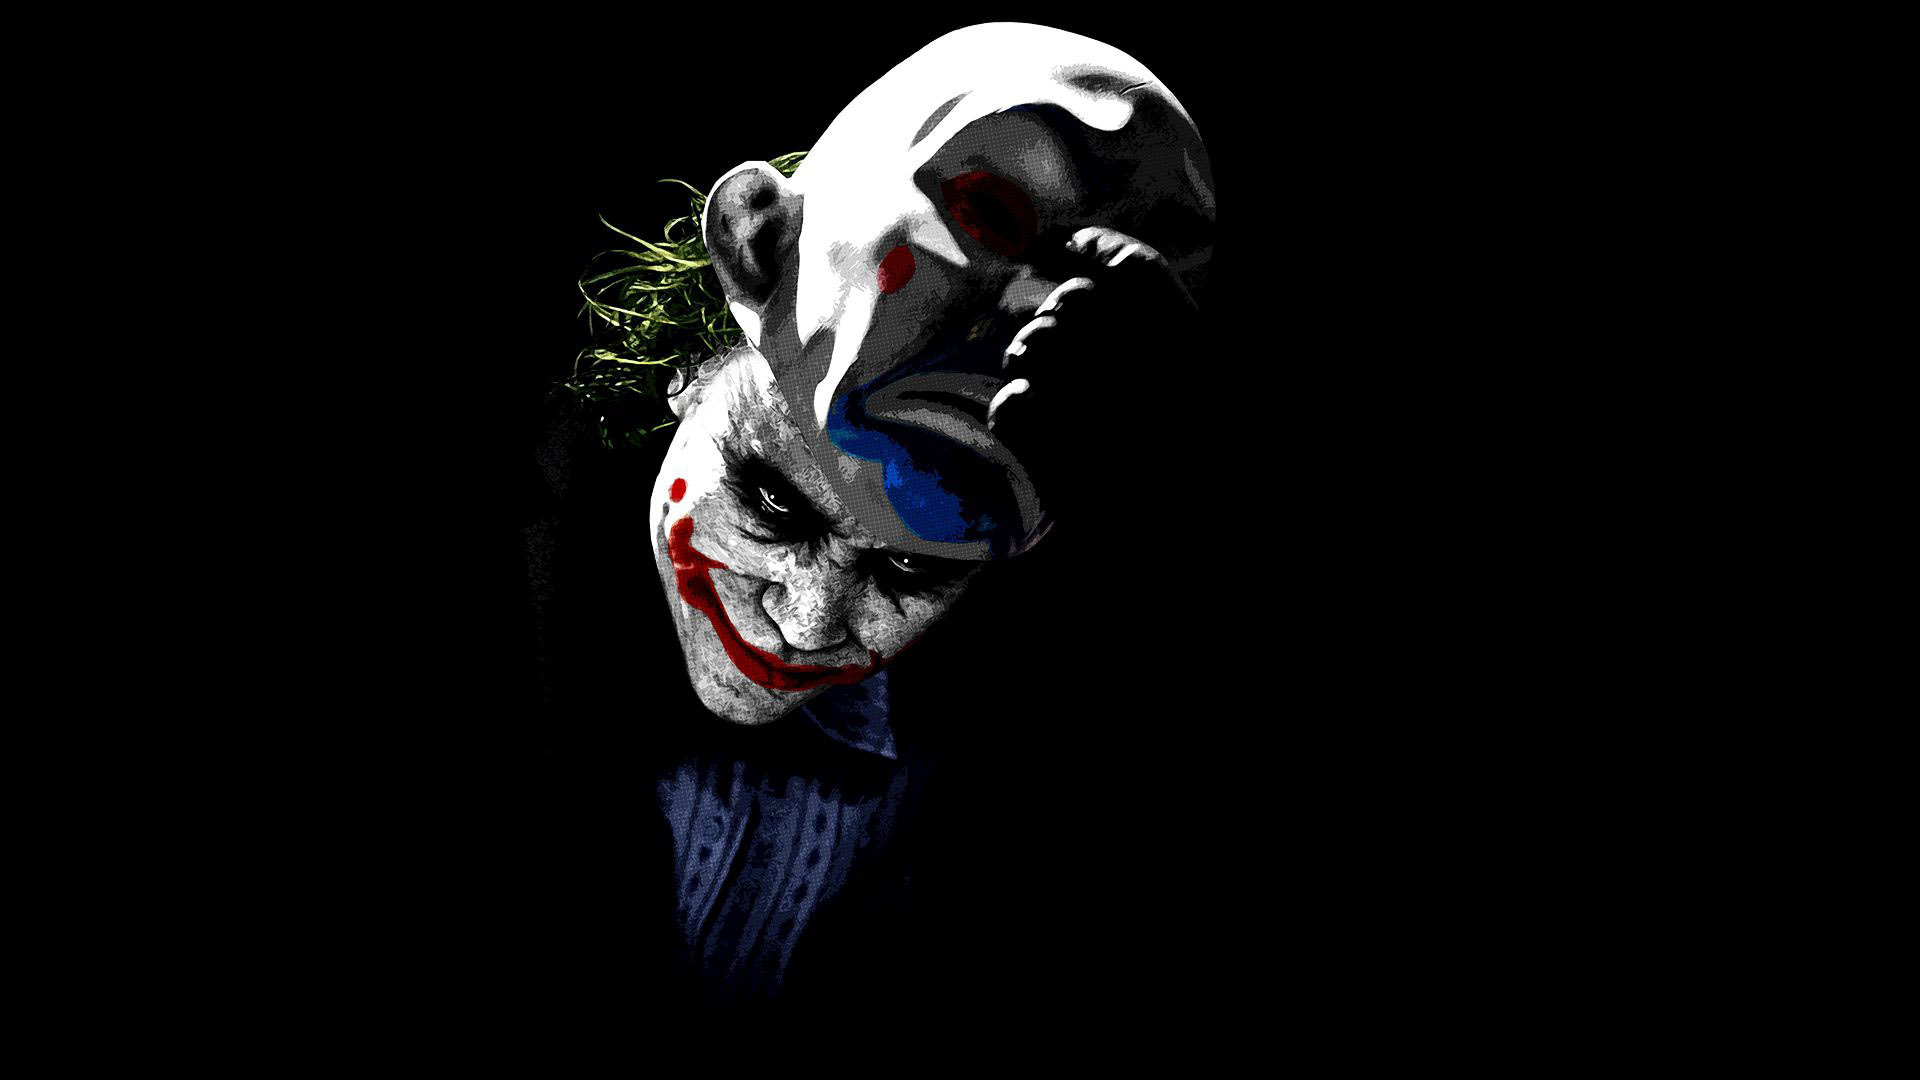 The Joker   The Dark Knight wallpaper 20431 1920x1080